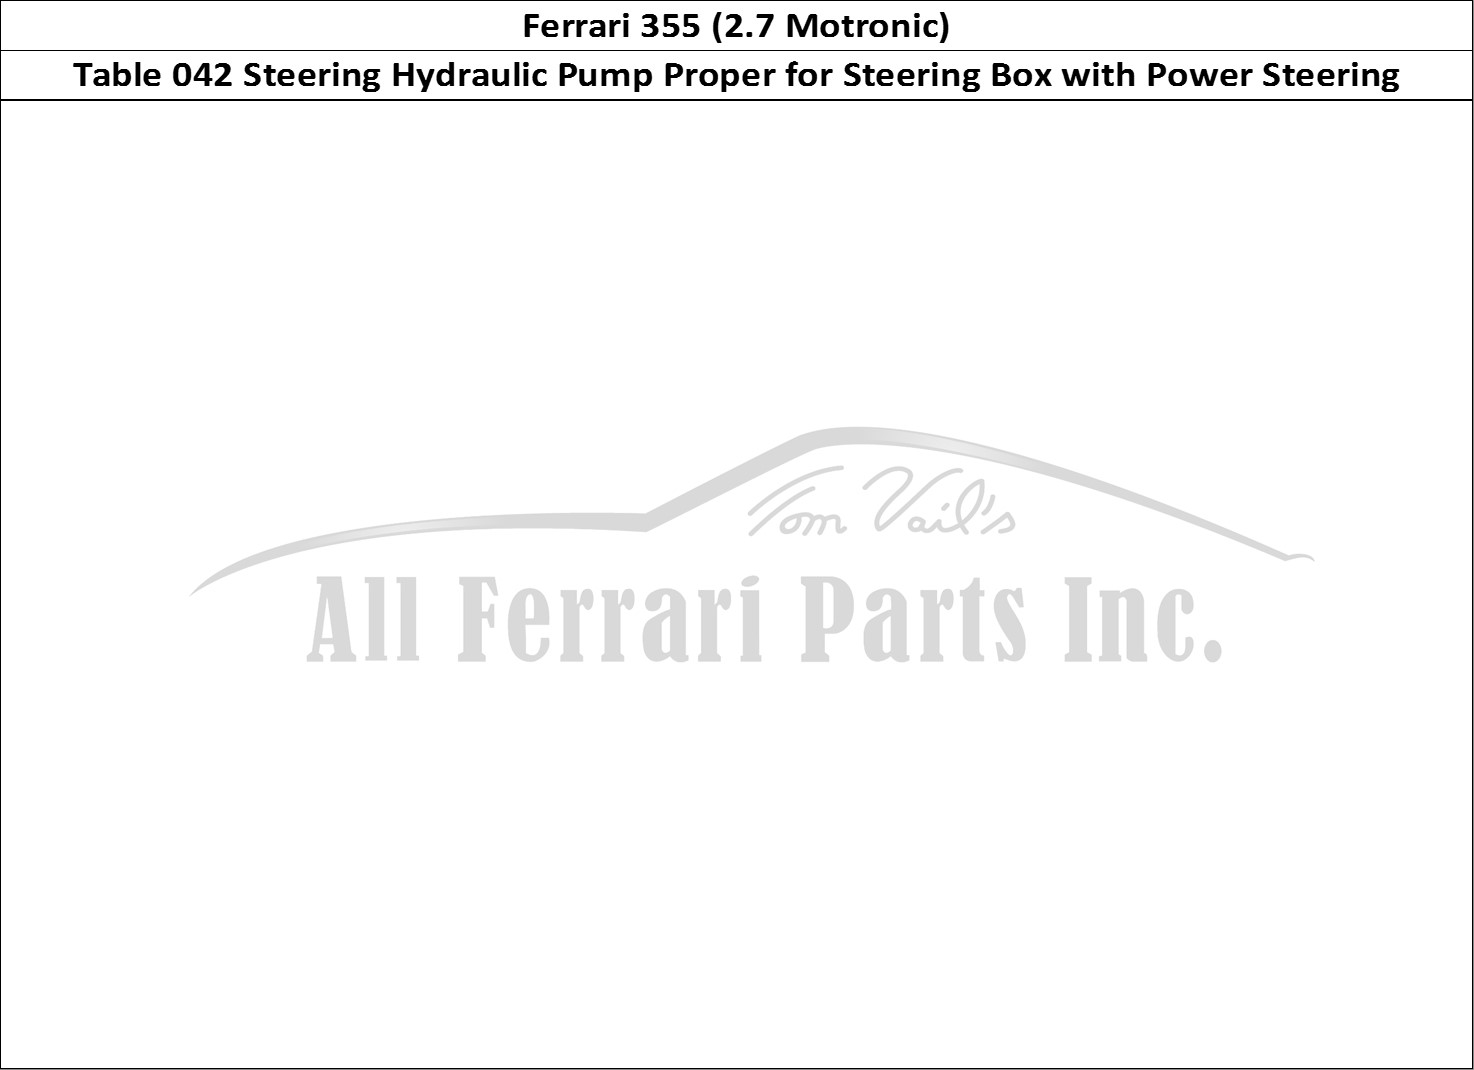 Ferrari Parts Ferrari 355 (2.7 Motronic) Page 042 Hydraulic Steering Pump -